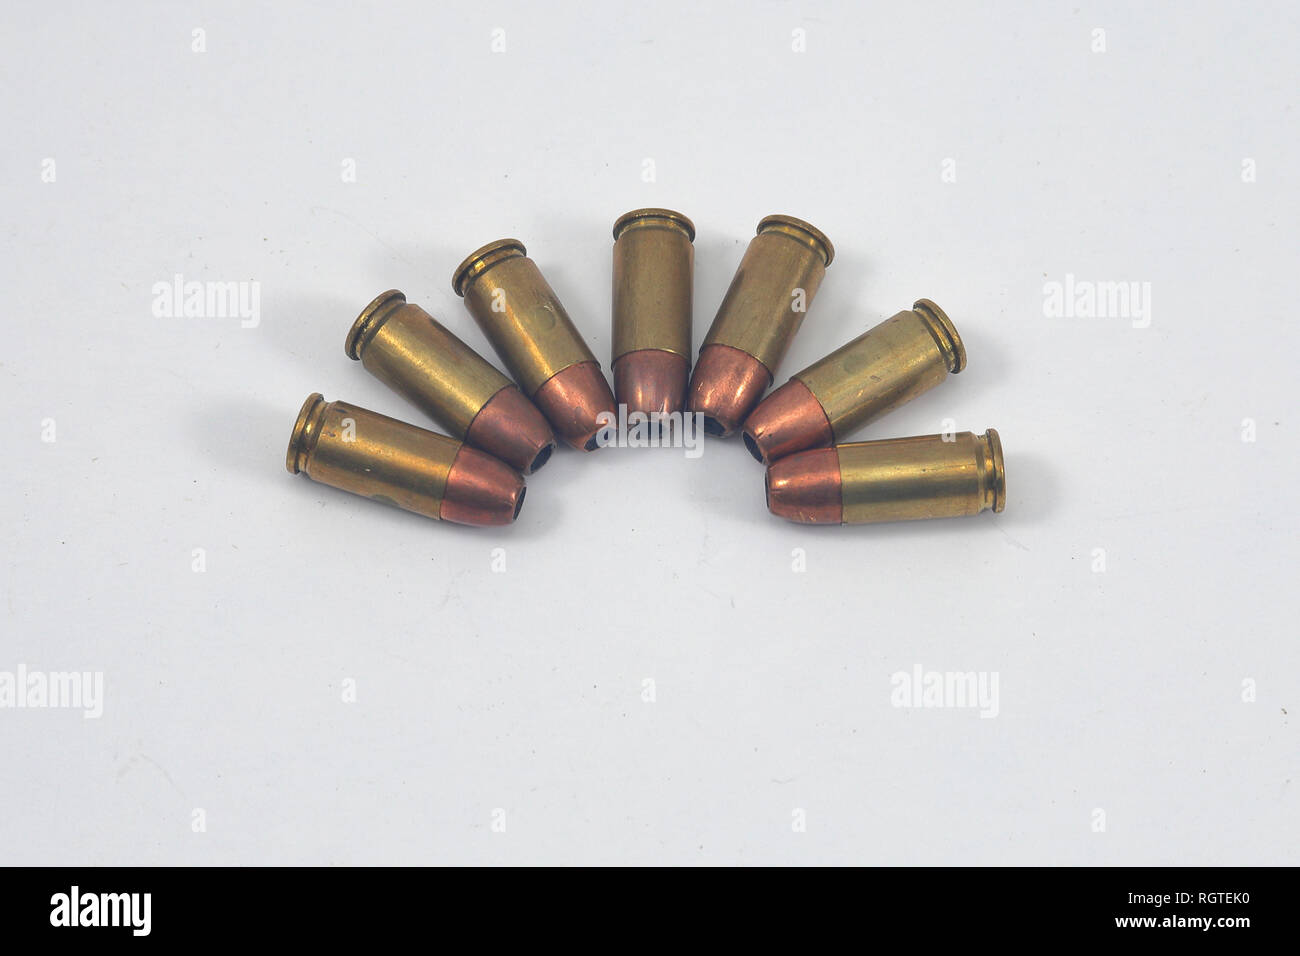 Pistol ammo used in semi-auto pistol, arranged on a white background Stock Photo